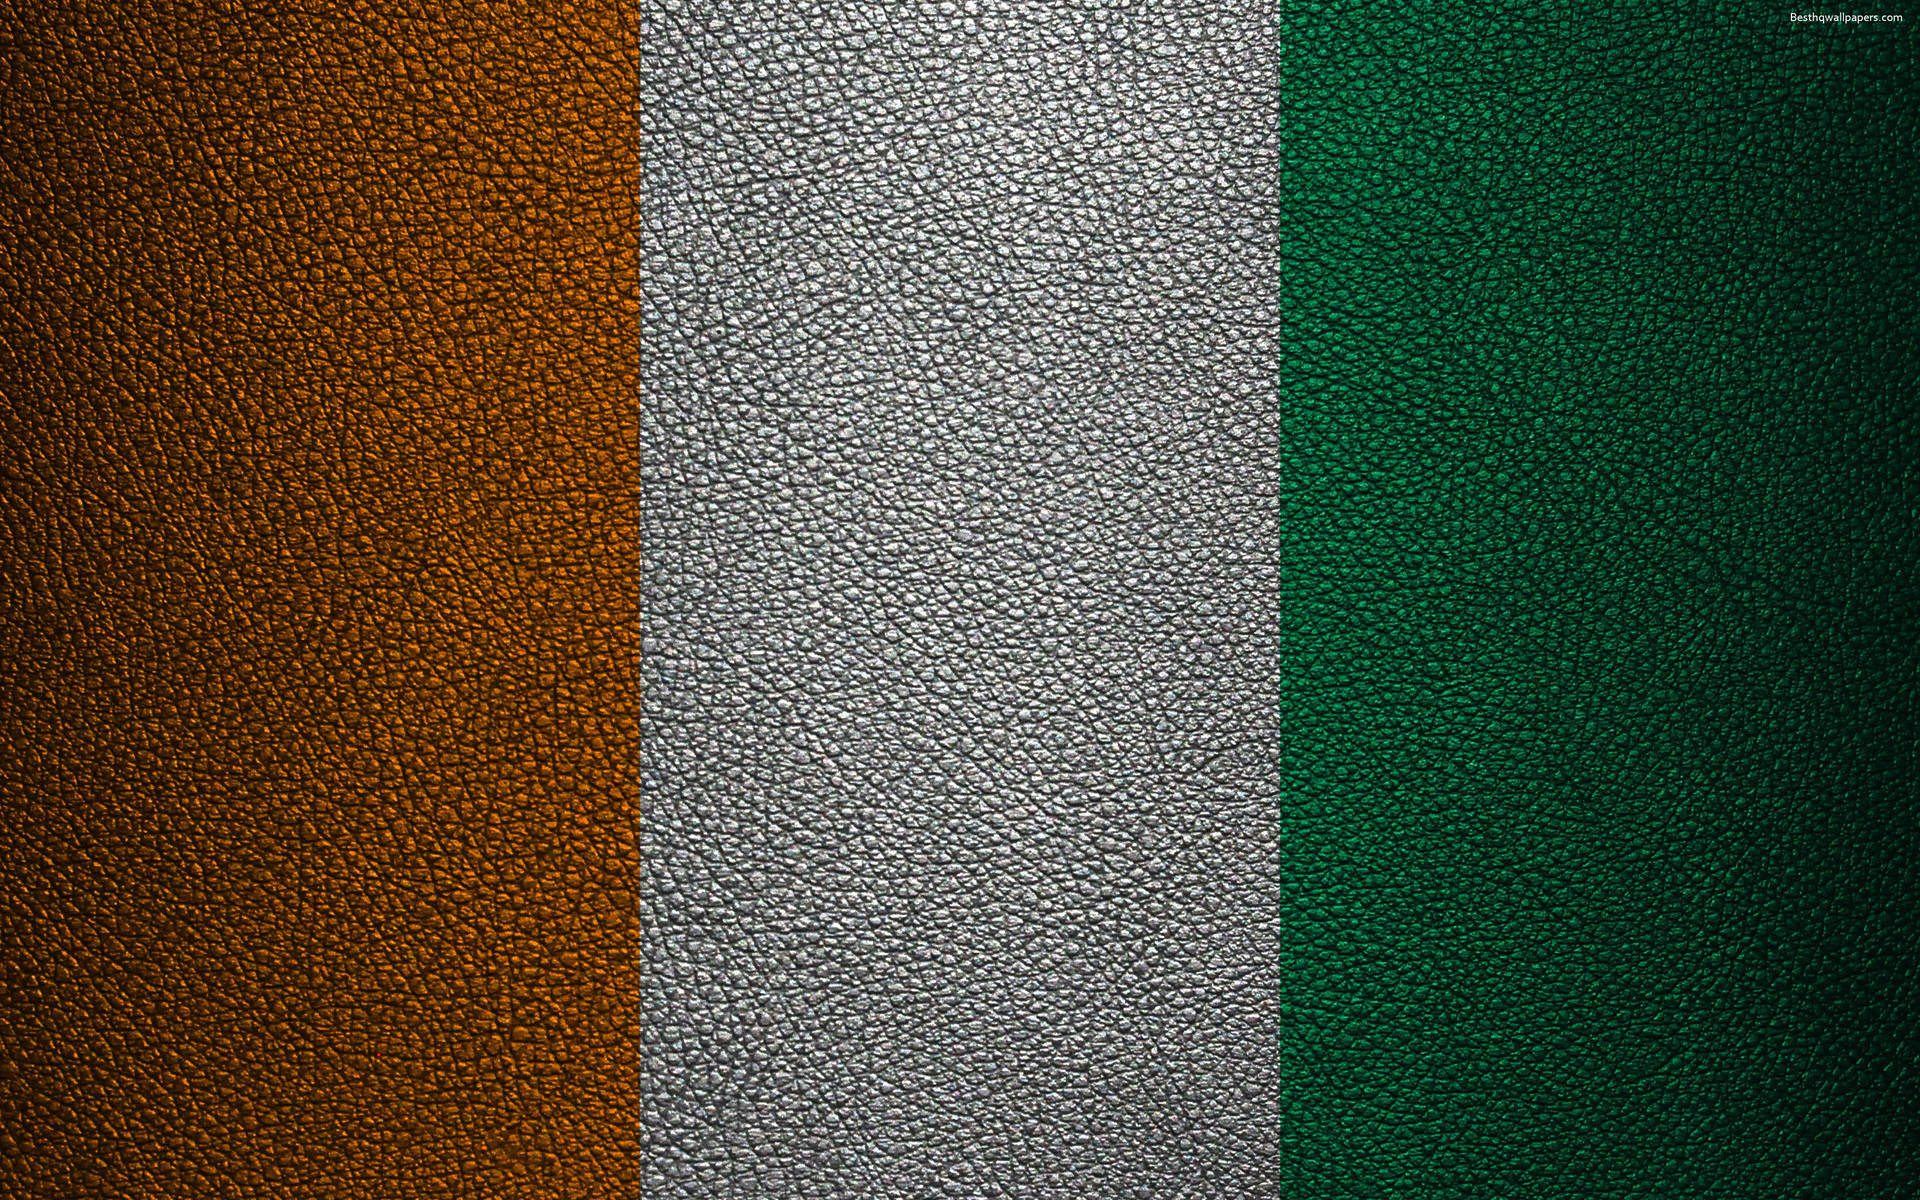 Leather-like Ivory Coast Flag